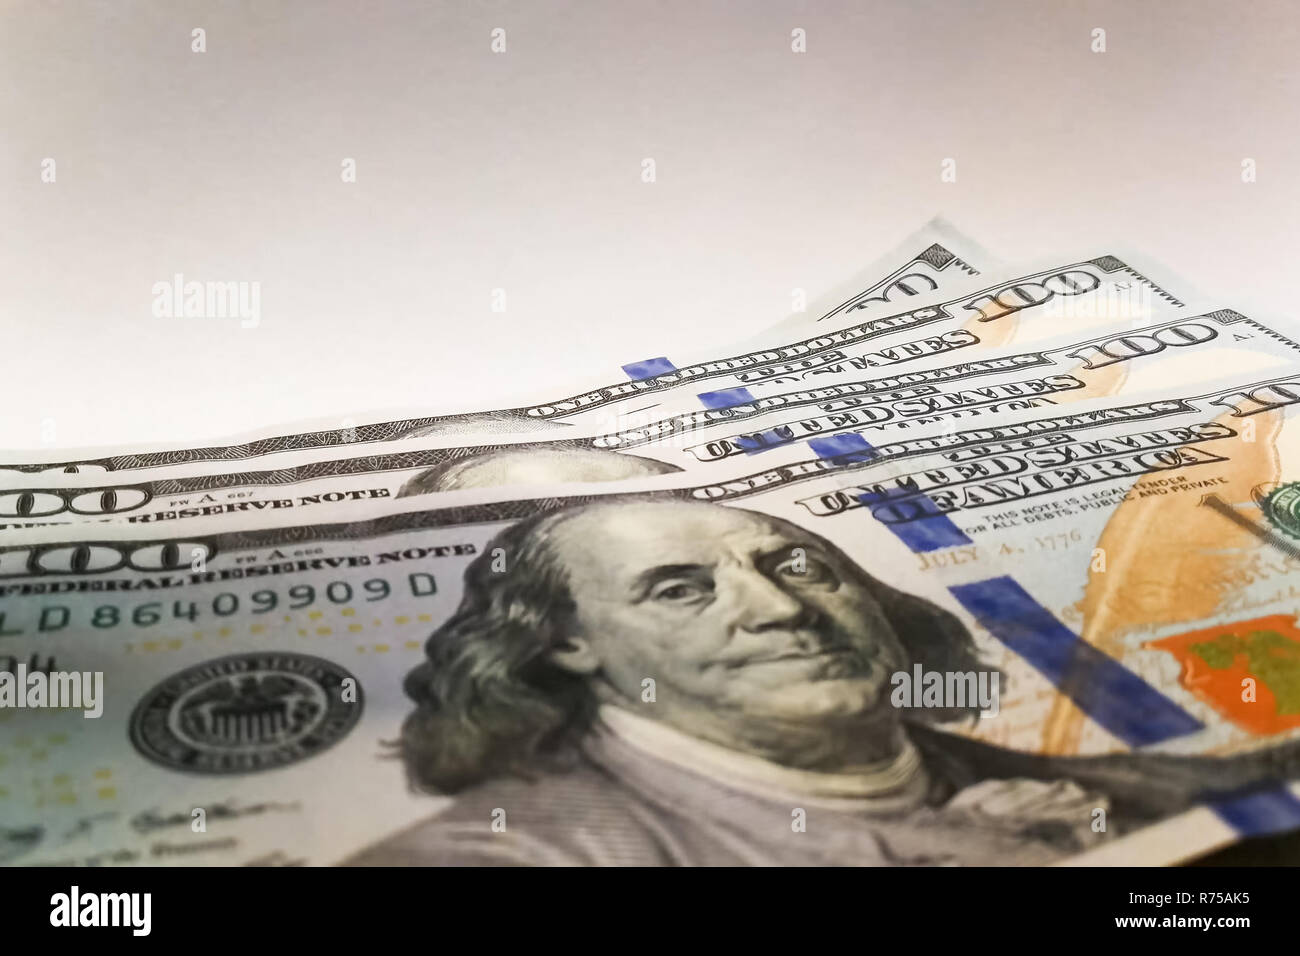 American dollars. Money banknotes. Bill of money dollar bills Stock Photo